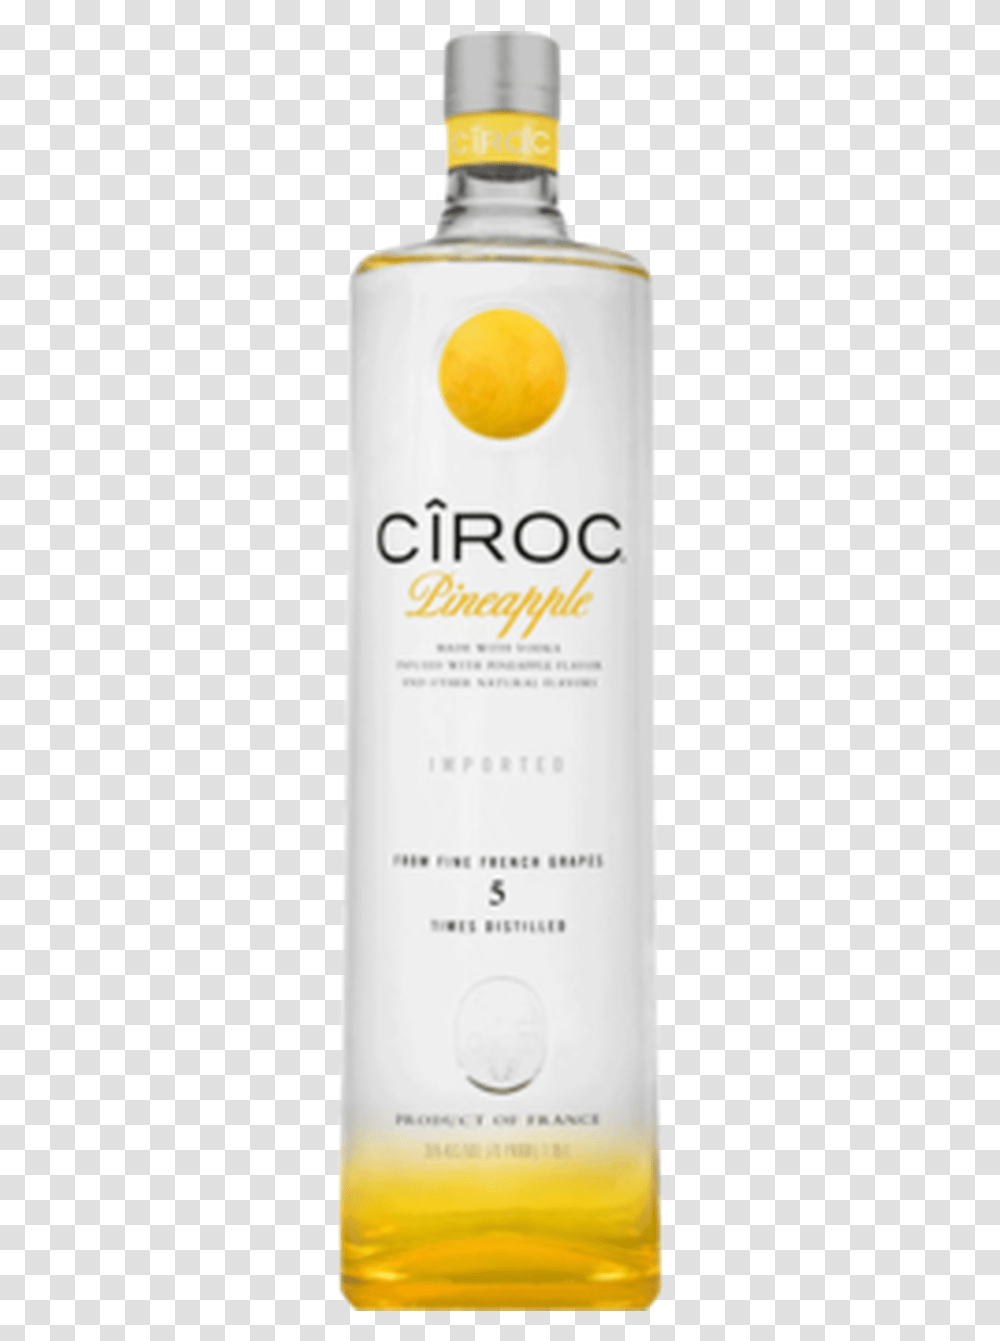 Ciroc Vodka Pineapple Walmart Ciroc Price, Alcohol, Beverage, Bottle, Liquor Transparent Png